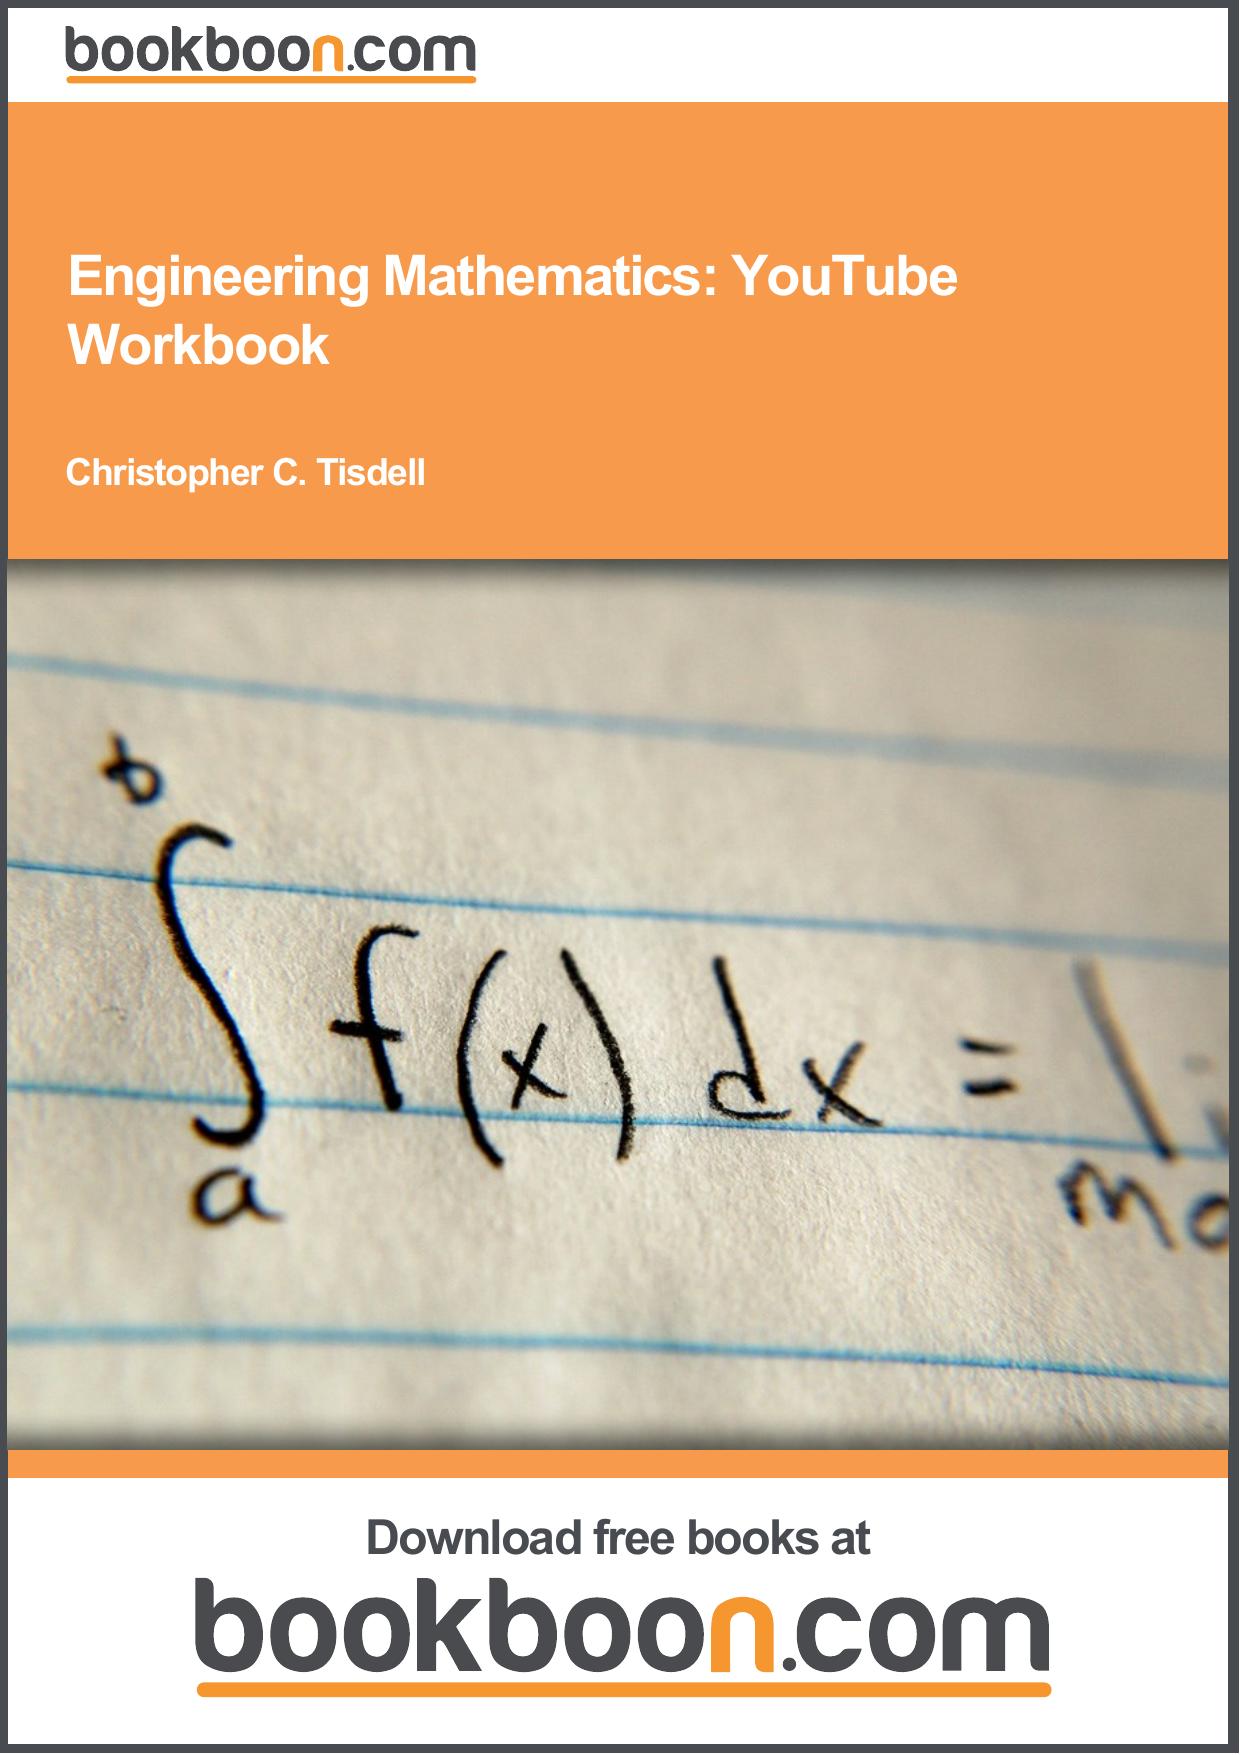 Engineering Mathematics: YouTube Workbook